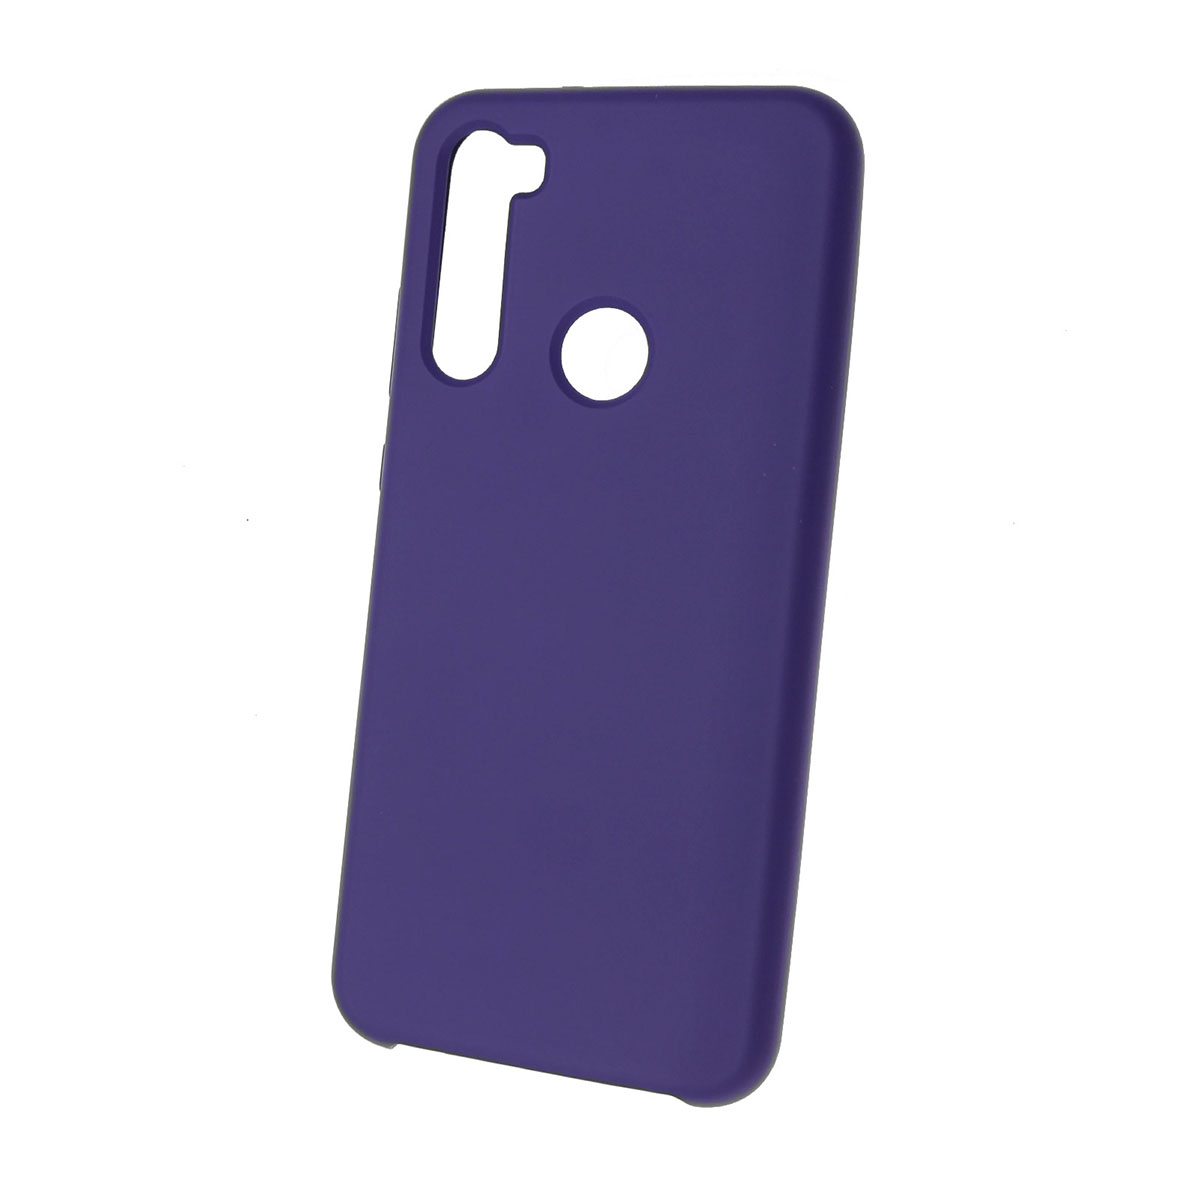 Чехол накладка Silicon Cover для XIAOMI Redmi Note 8T, силикон, бархат, цвет синий индиго.